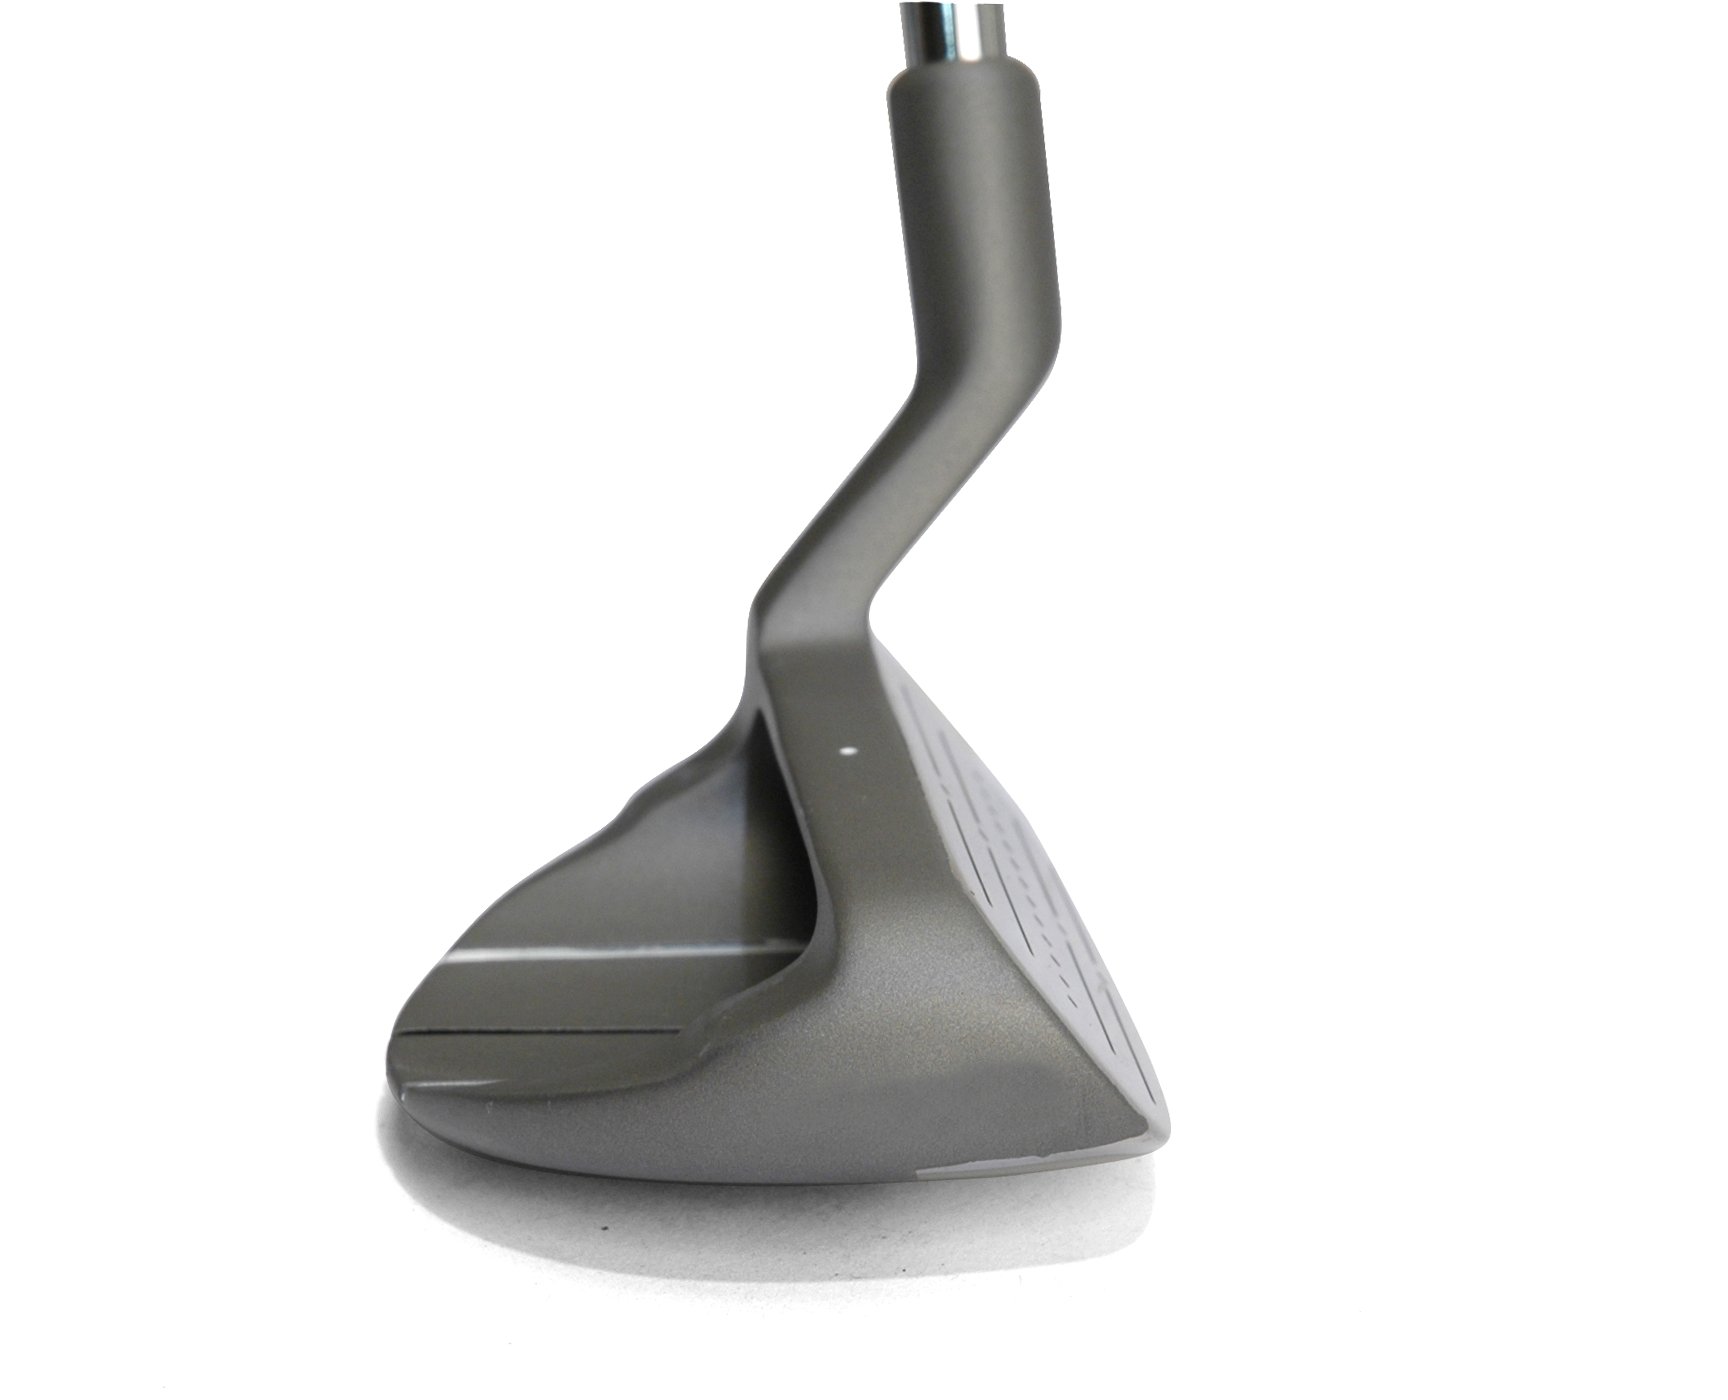 Pinemeadow Golf Hybrid Putter (Right-Handed, Regular, 34-Inch)